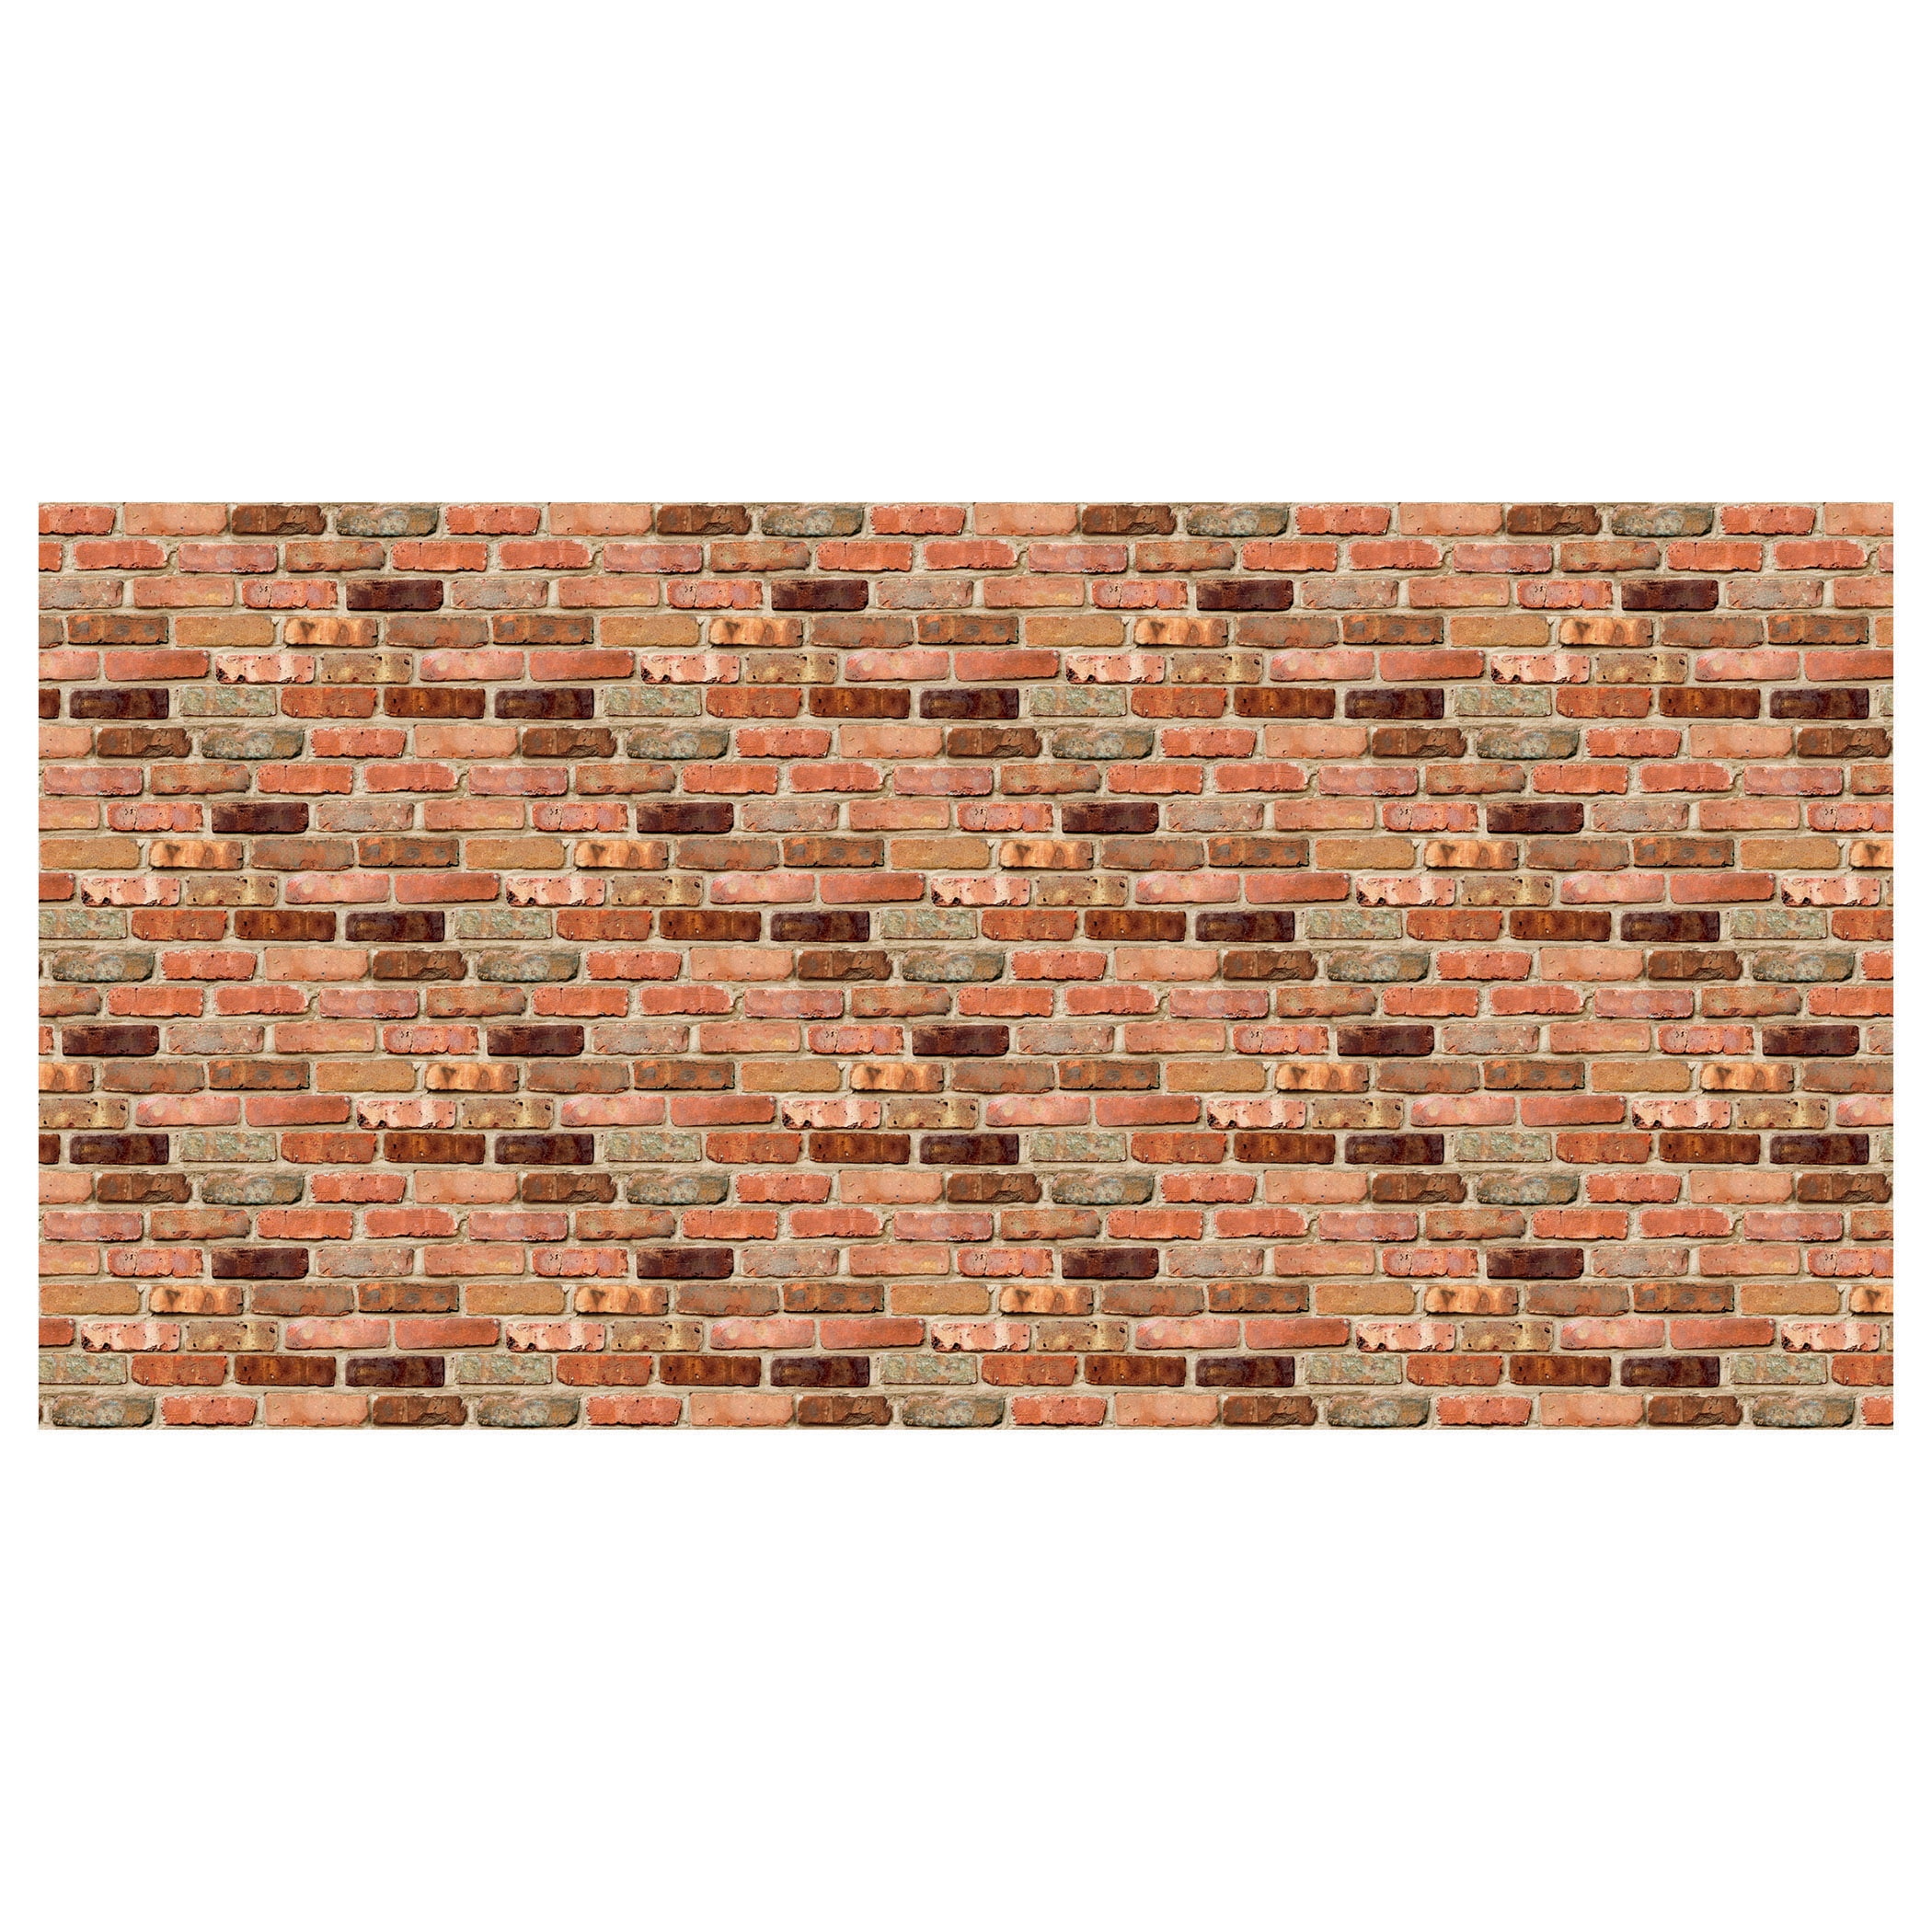 NEW CARDBOARD FIREPLACE 10 Sq' Red Brick Corrugated Paper 1 Roll COROBUFF 2'X 5' 